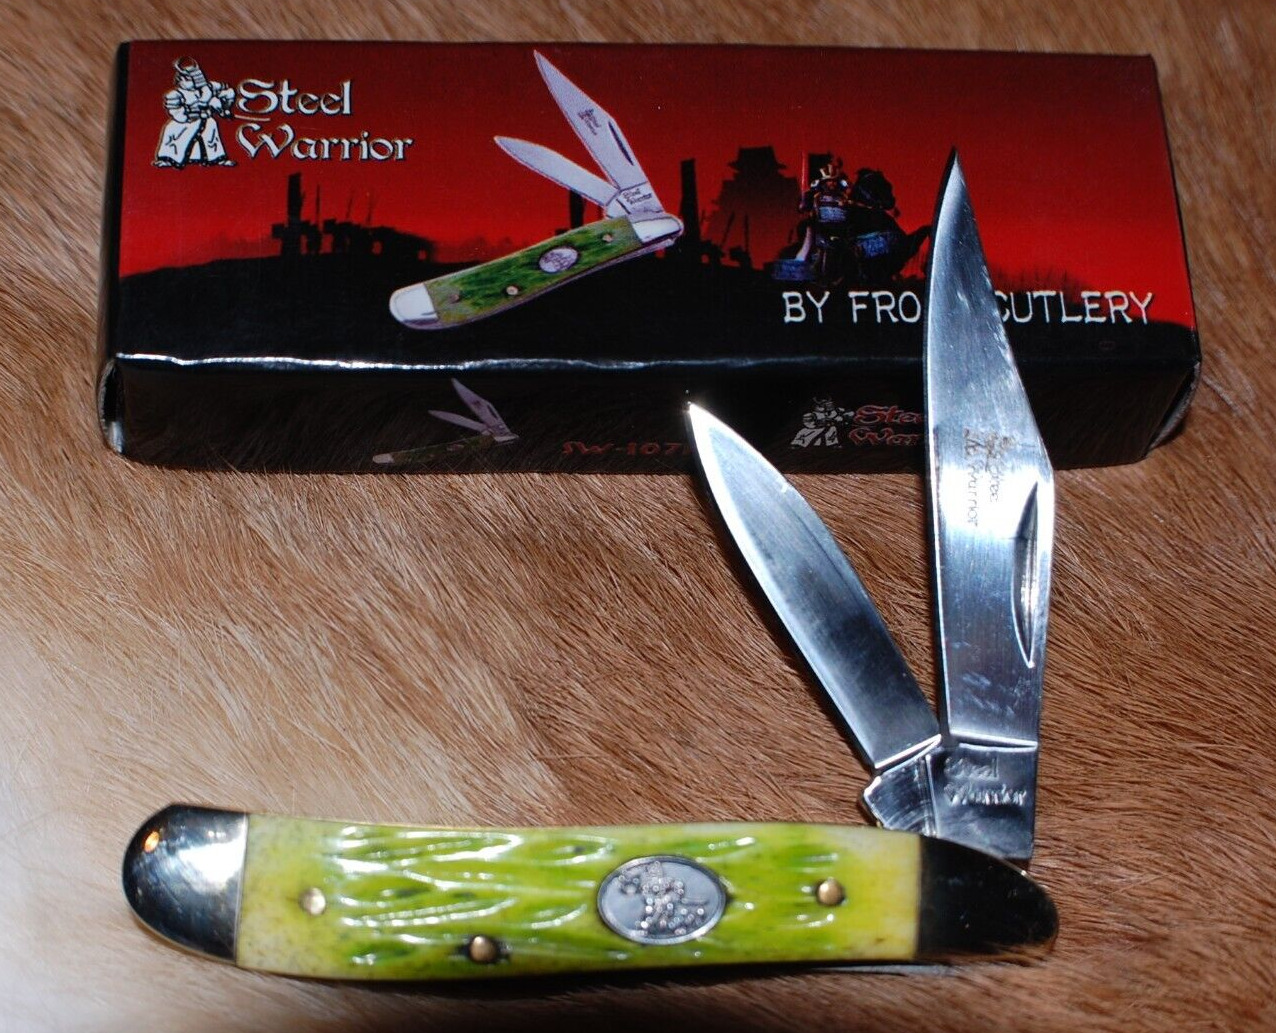 Steel Warrior Peanut Folding Pocket Knife - Jigged Key Lime Green Bone Handles